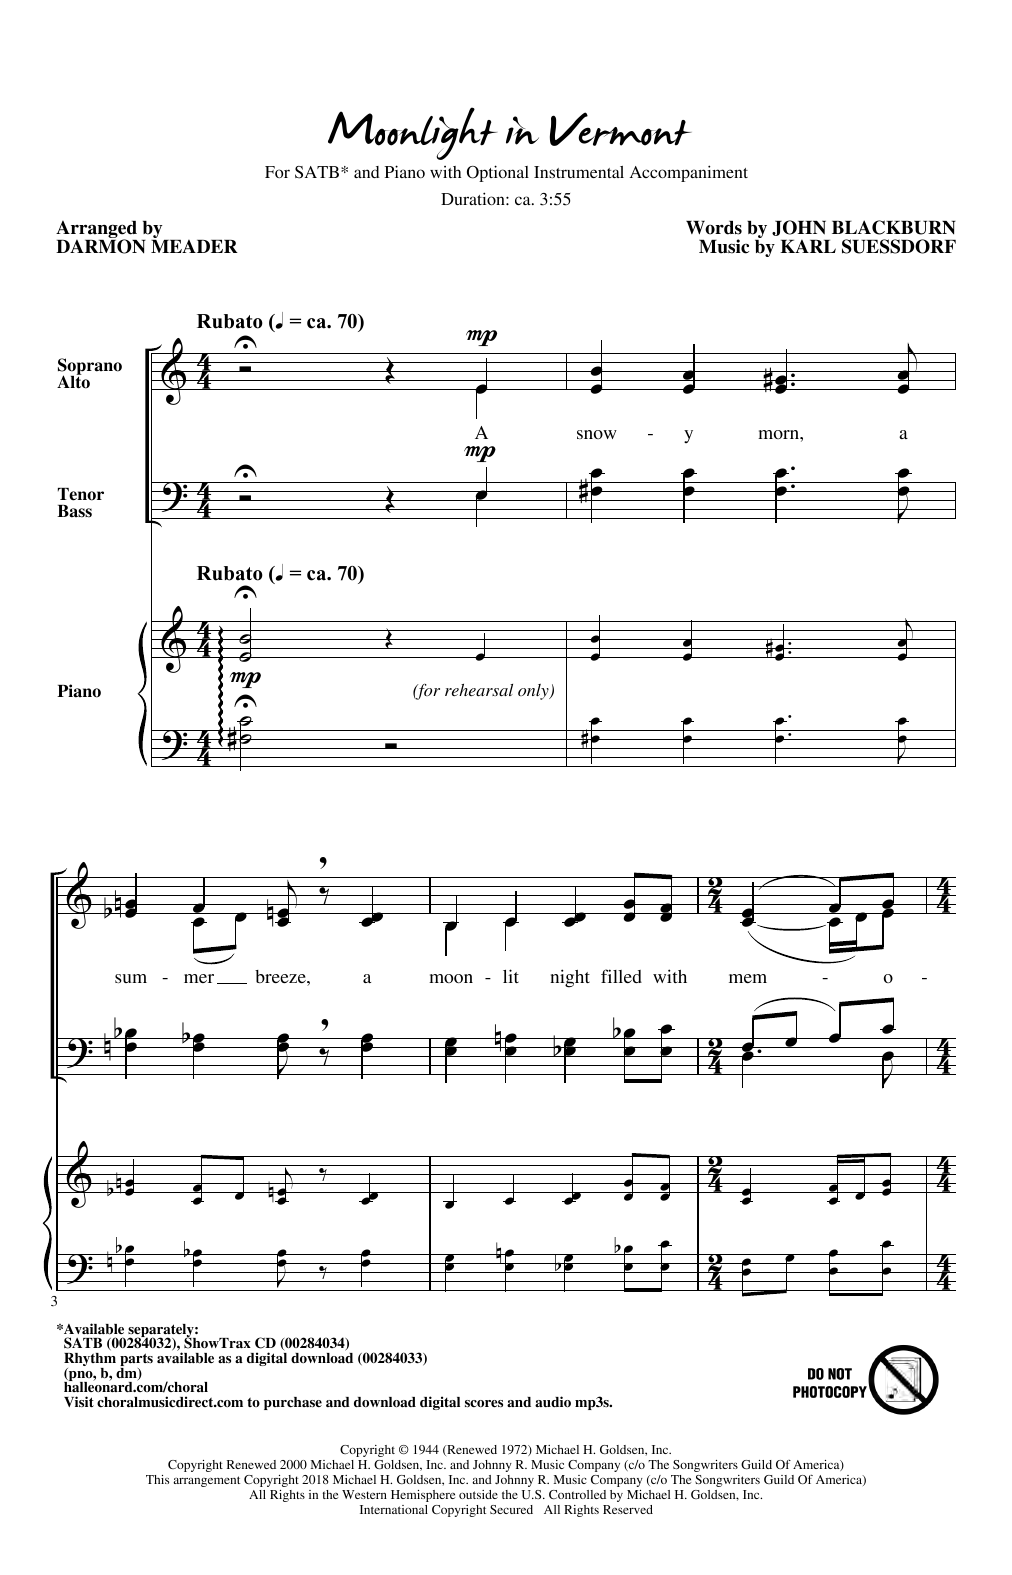 John Blackburn & Karl Suessdorf Moonlight in Vermont (arr. Darmon Meader) Sheet Music Notes & Chords for SATB - Download or Print PDF